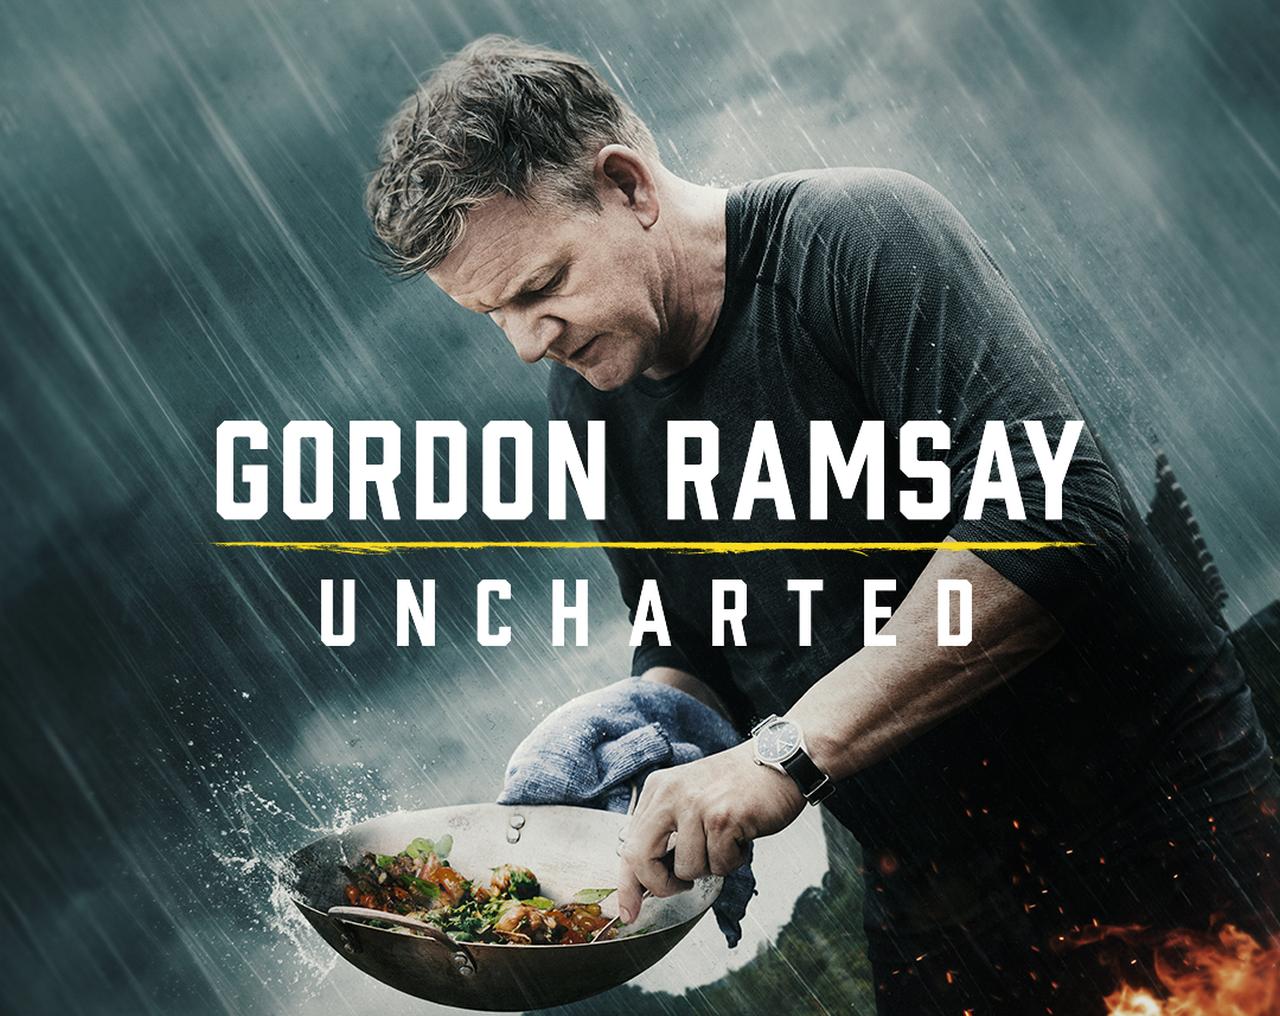 Nova temporada de Gordan Ramsay: uncharted arranca com episódio na Nazaré